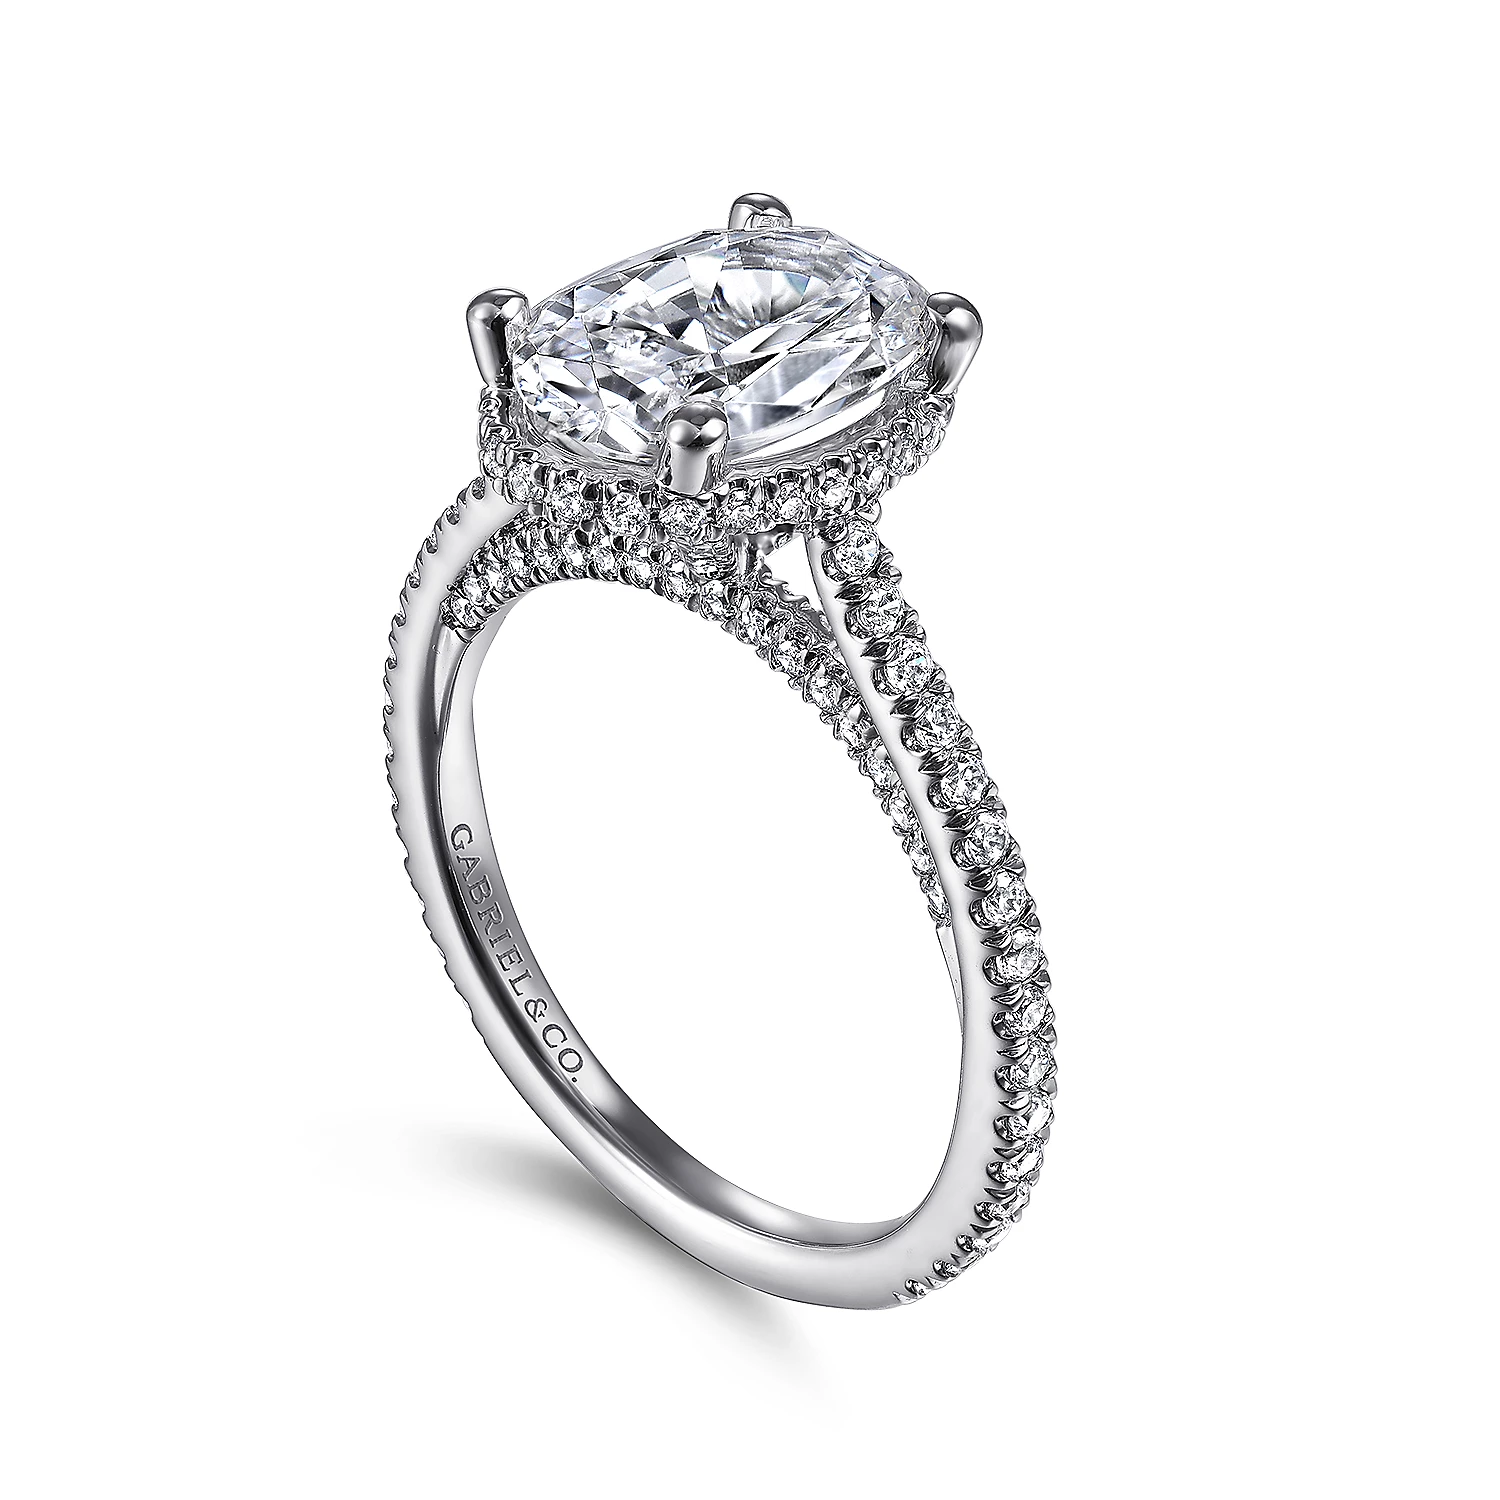 Fiona 2.09 carat oval diamond engagement ring | naturesparkle